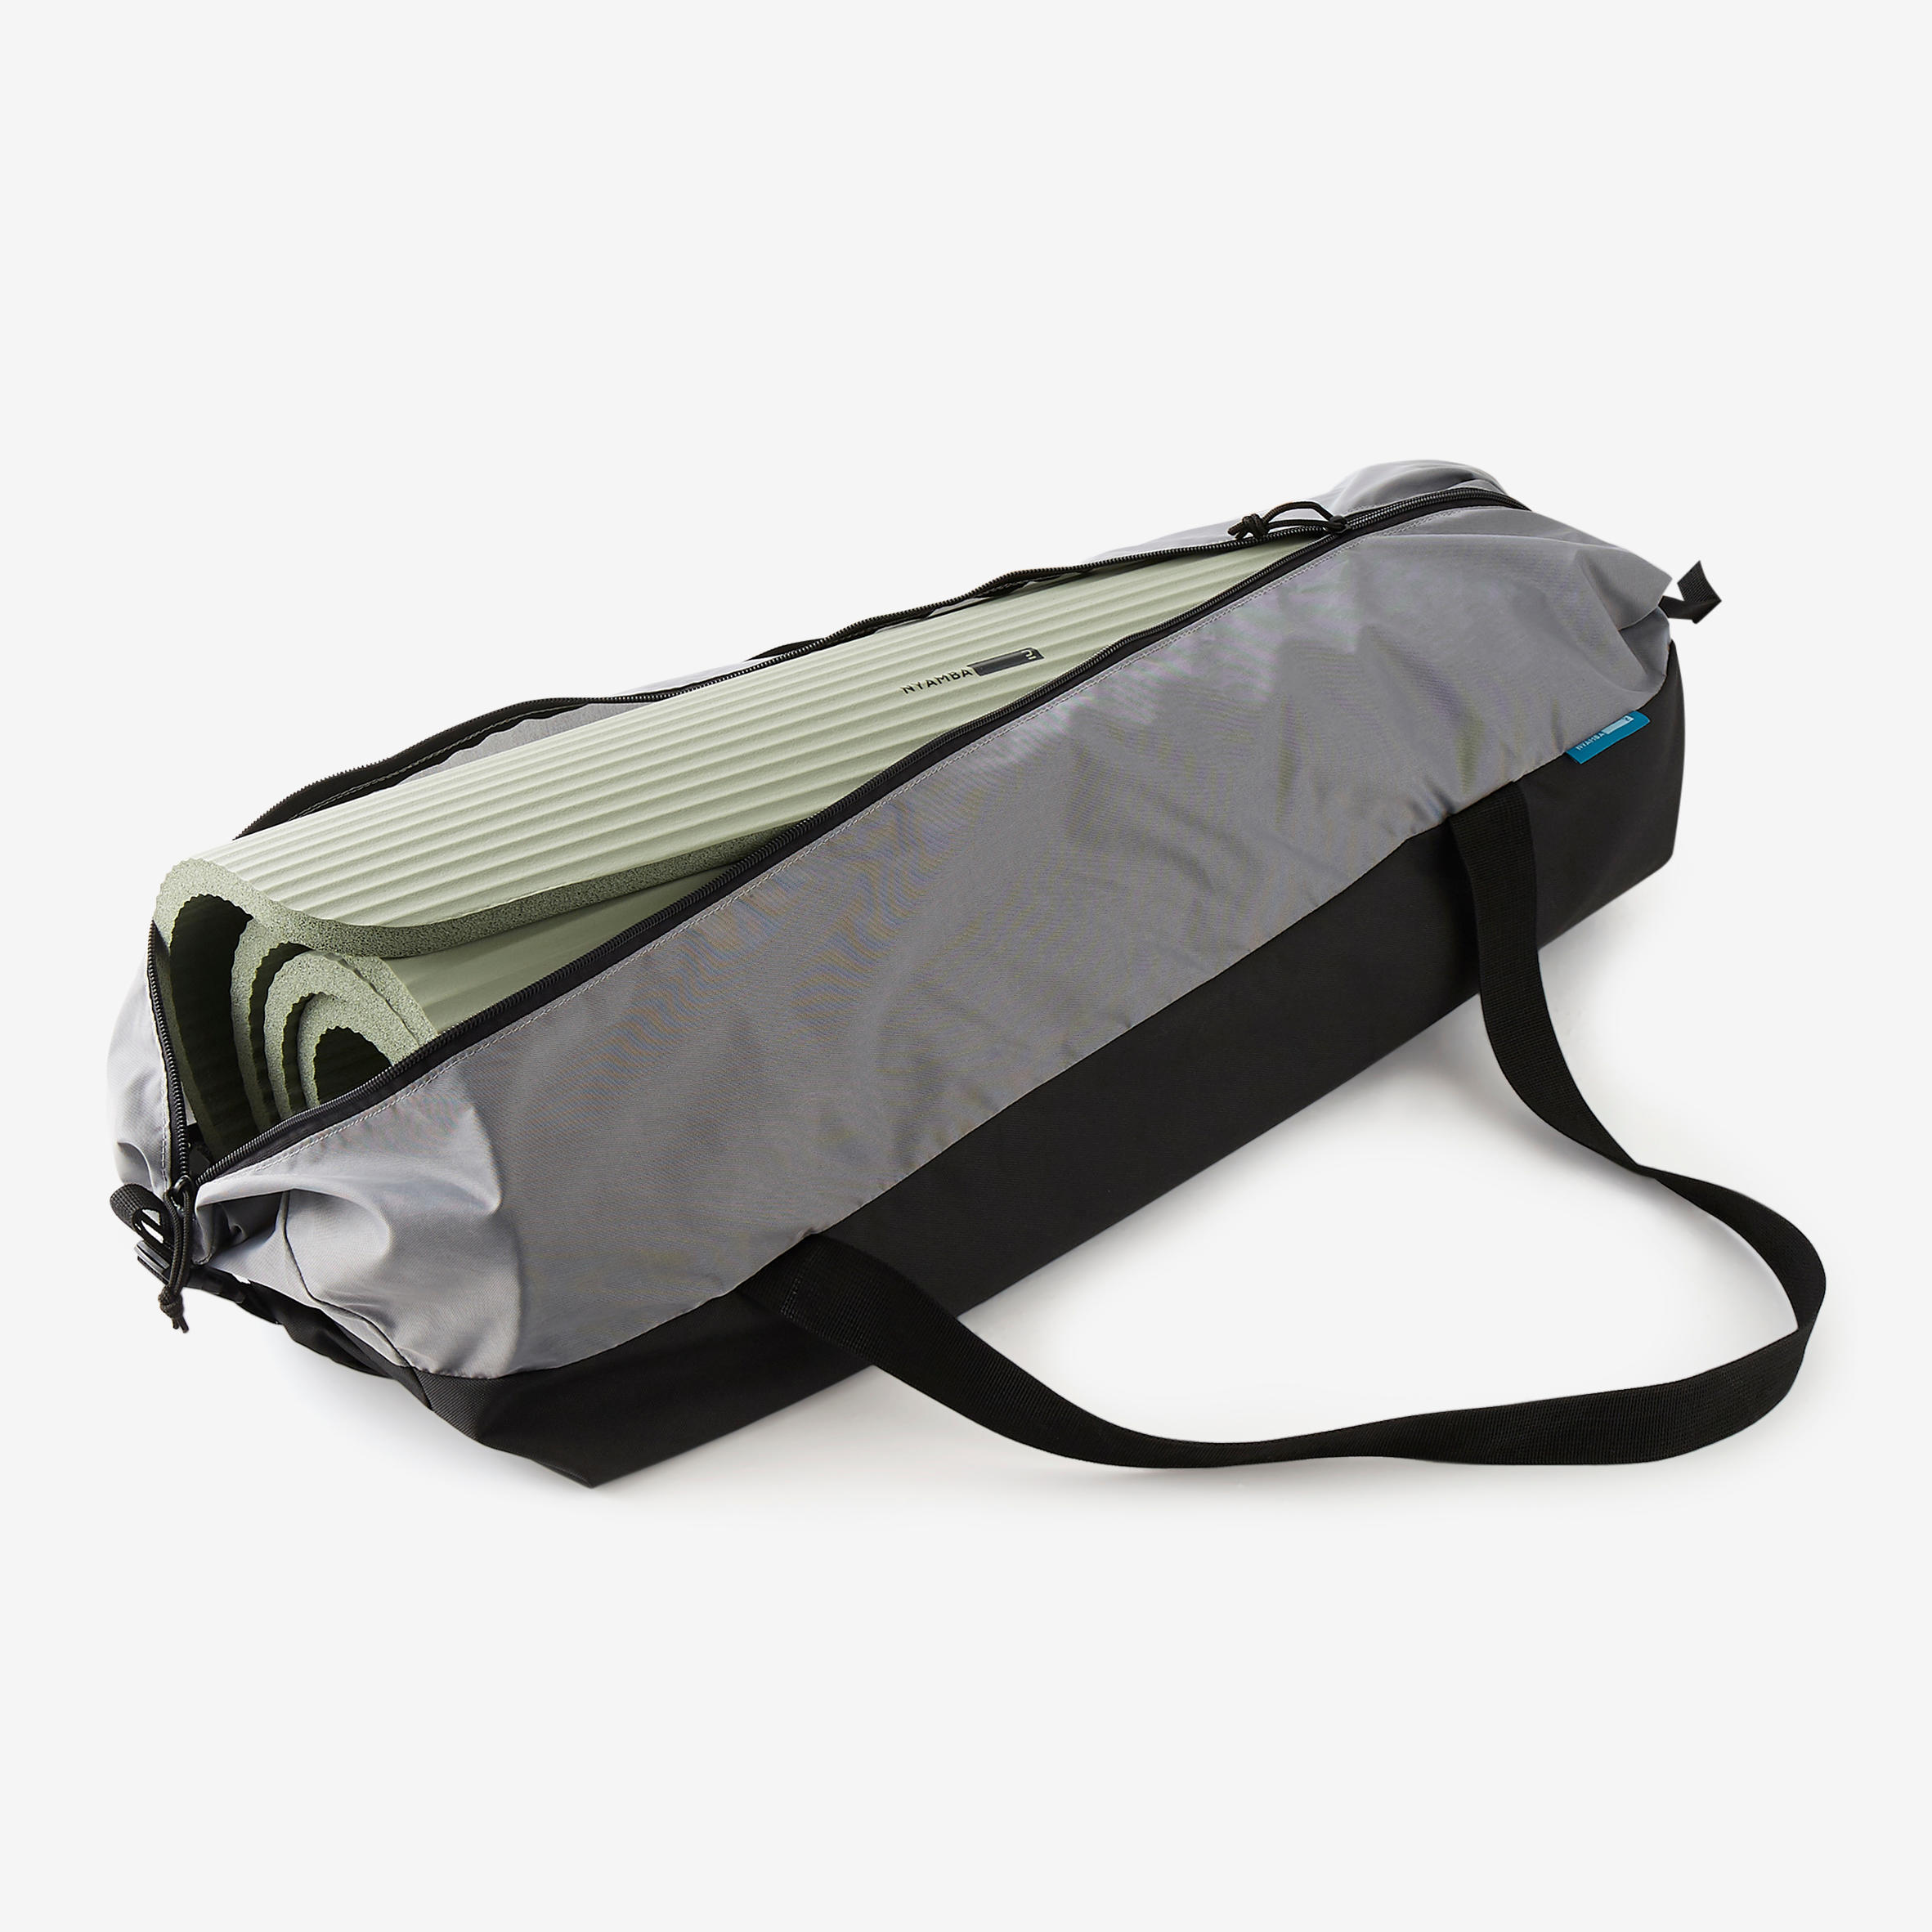 Phatmat Carry Bag - Yoga Bag - Pilates Bag - Buy Online - Phatmats